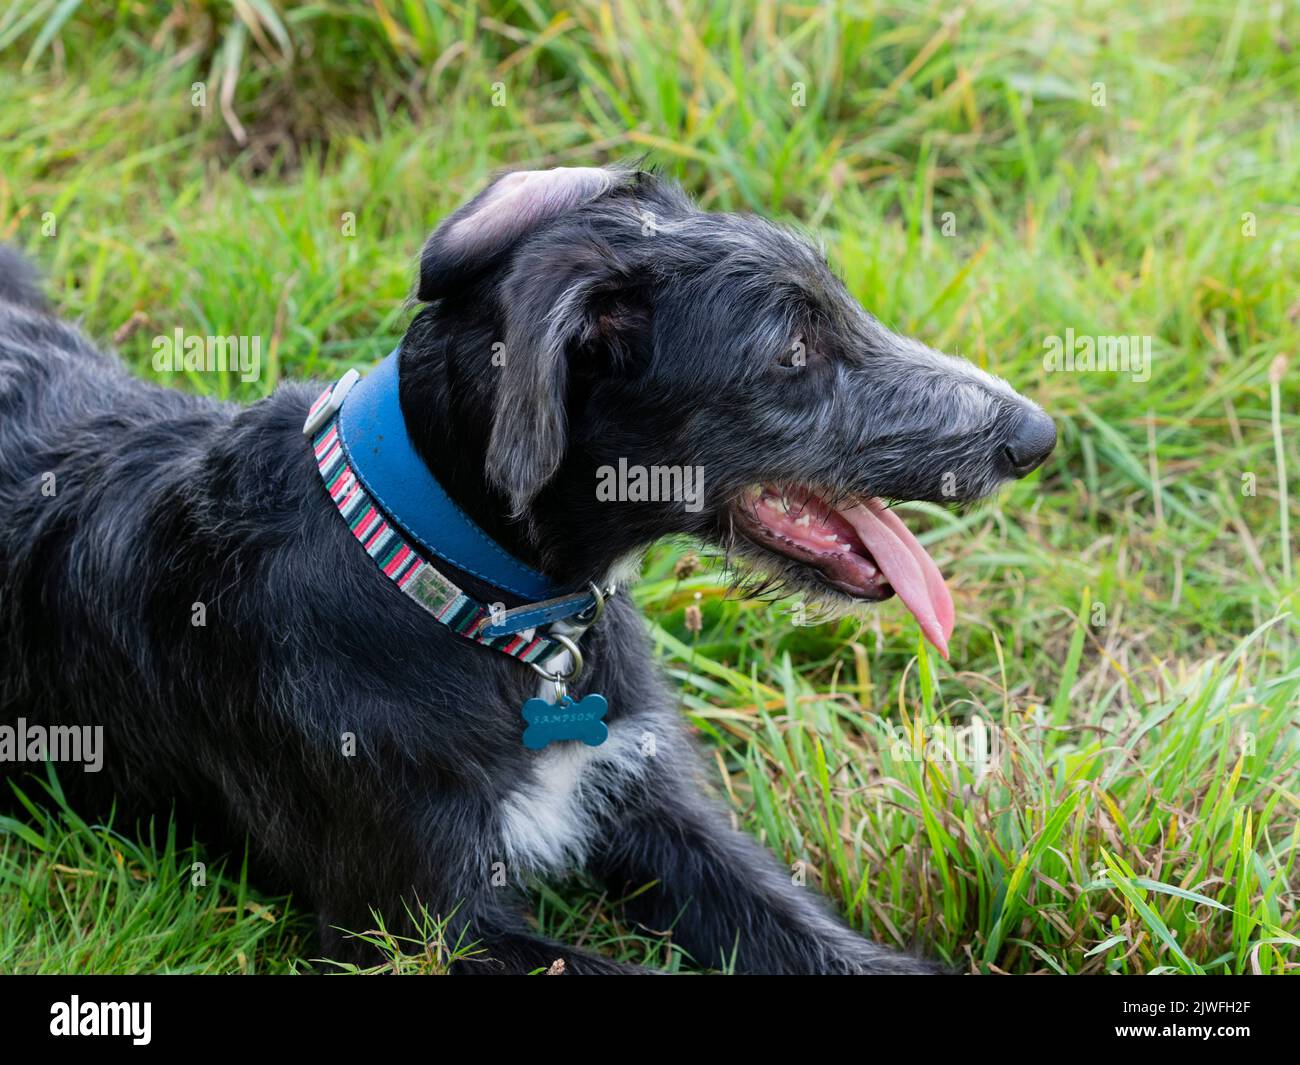 Headd shot of an 18 week old male deerhound x greyhound black and grey lurcher puppy resting in a grassy field Stock Photo